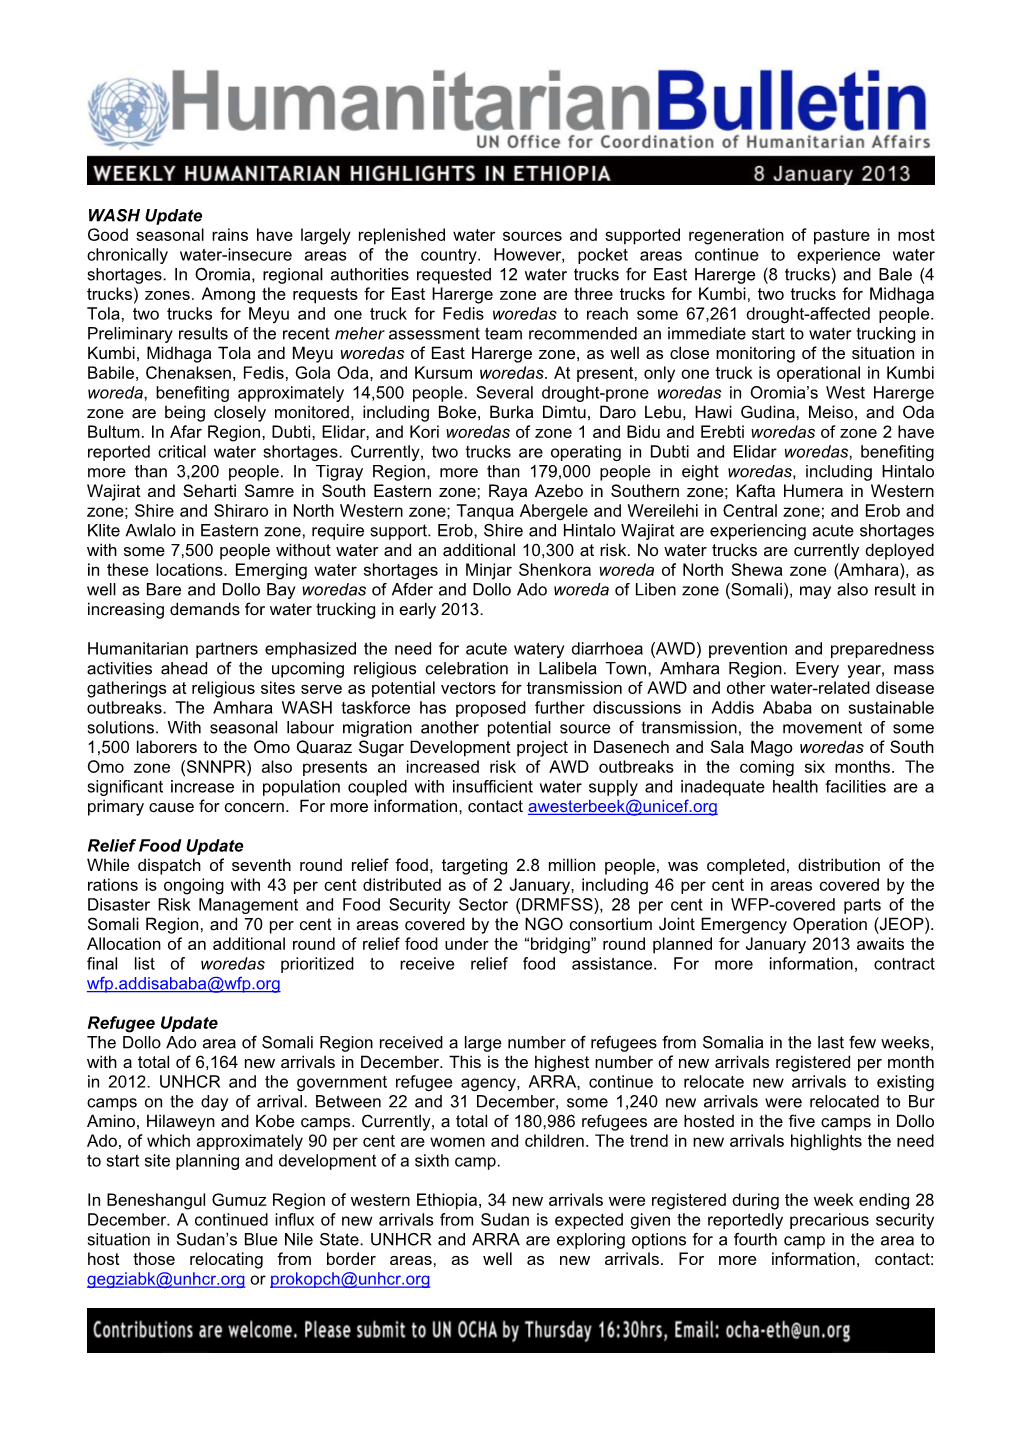 Humanitarian Bulletin 8 January 2013.Pdf